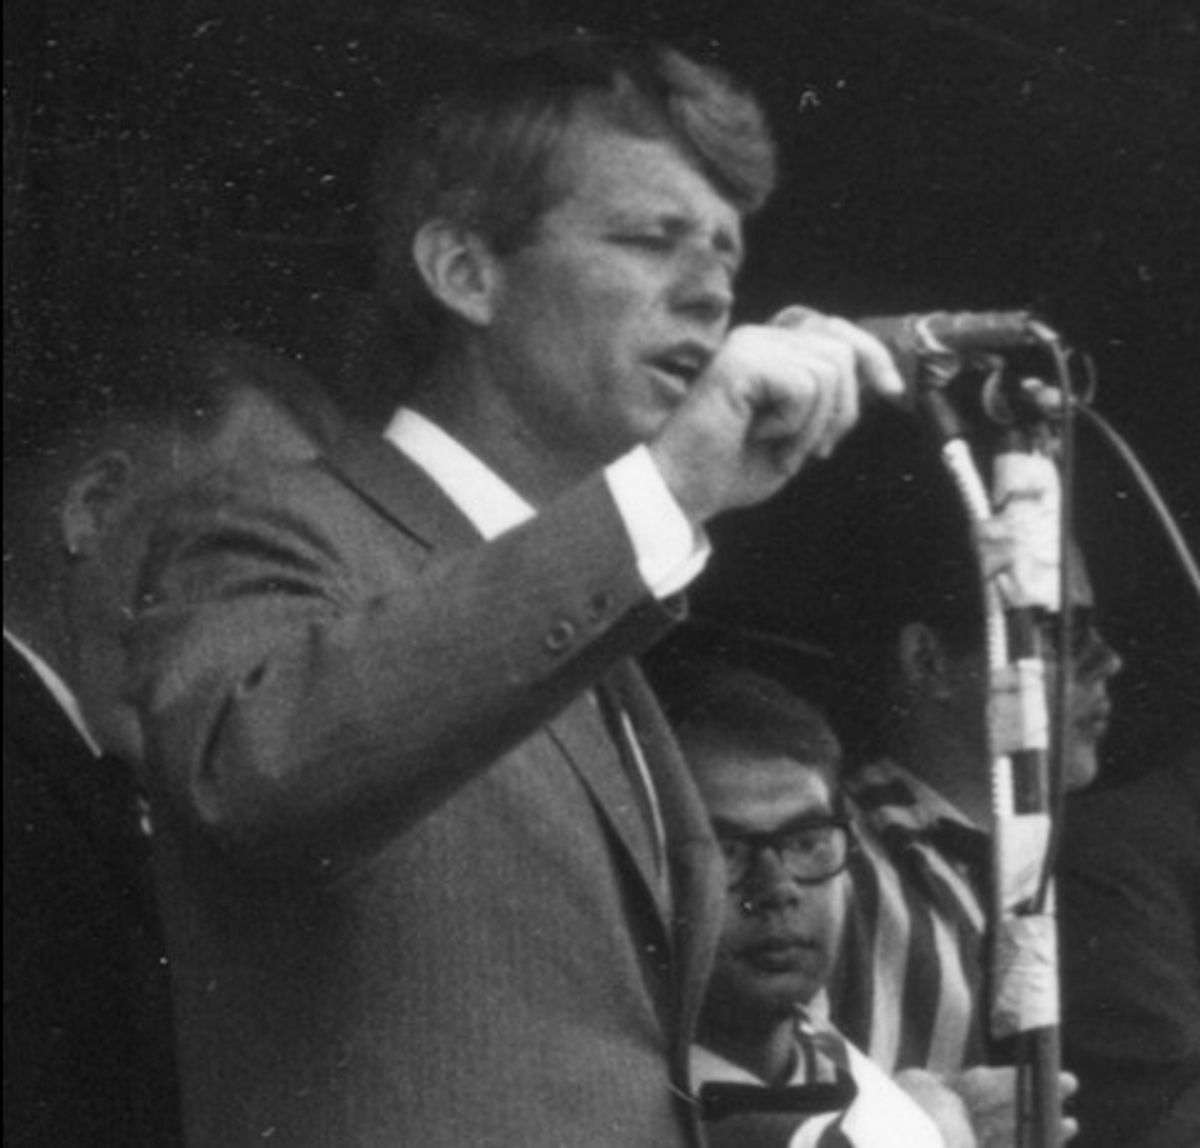  Robert F. Kennedy  (via Wikipedia)